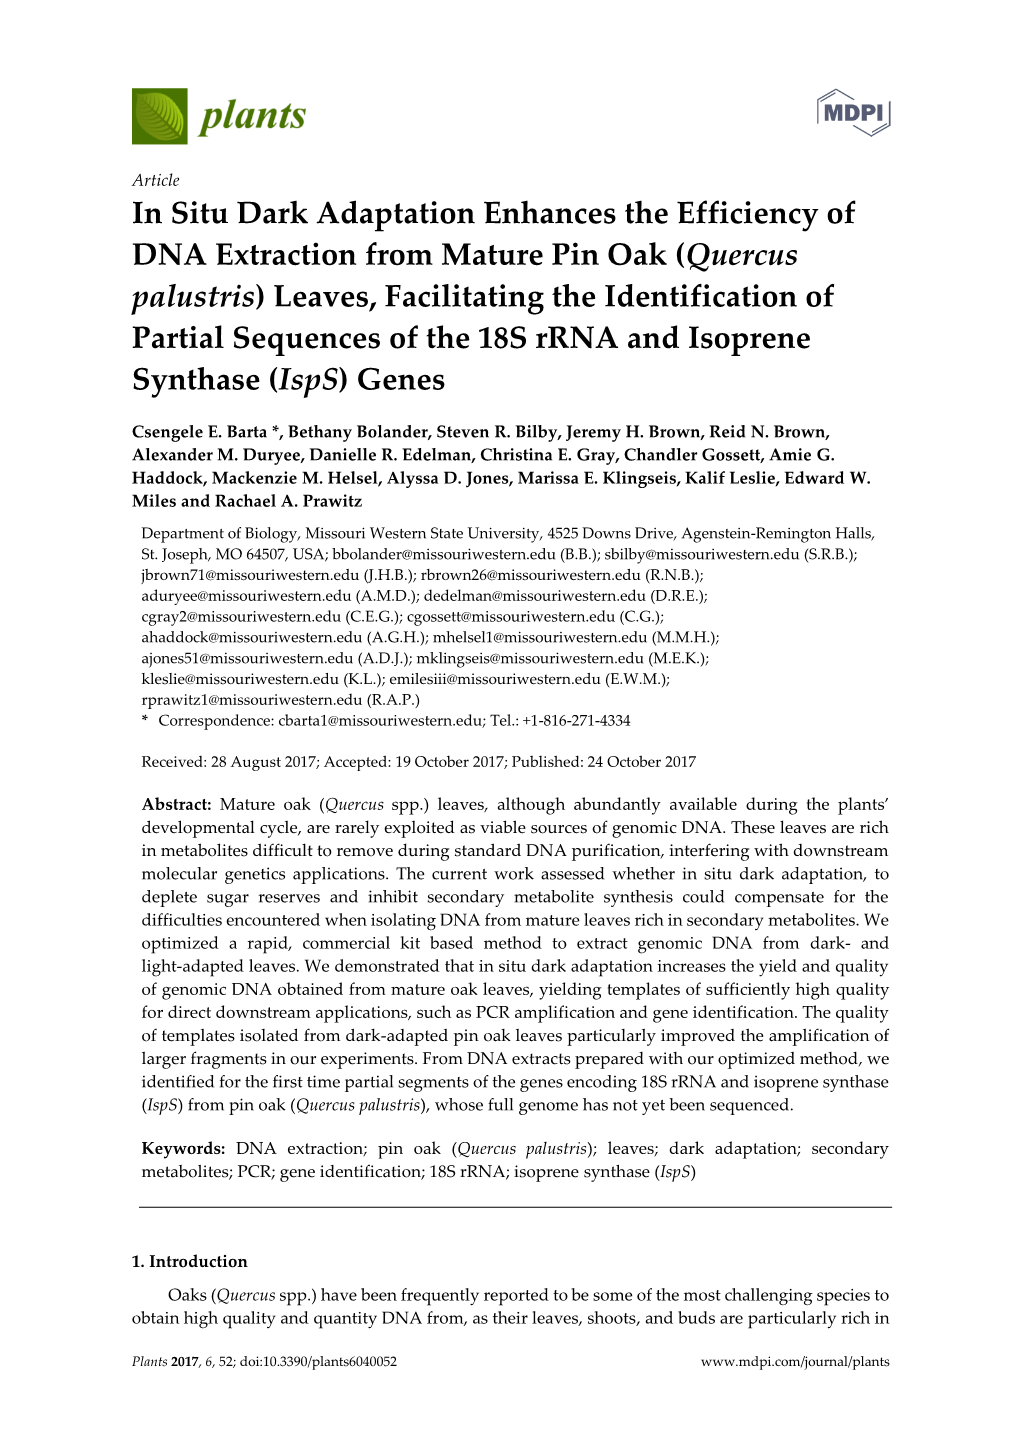 In Situ Dark Adaptation Enhances the Efficiency of DNA Extraction